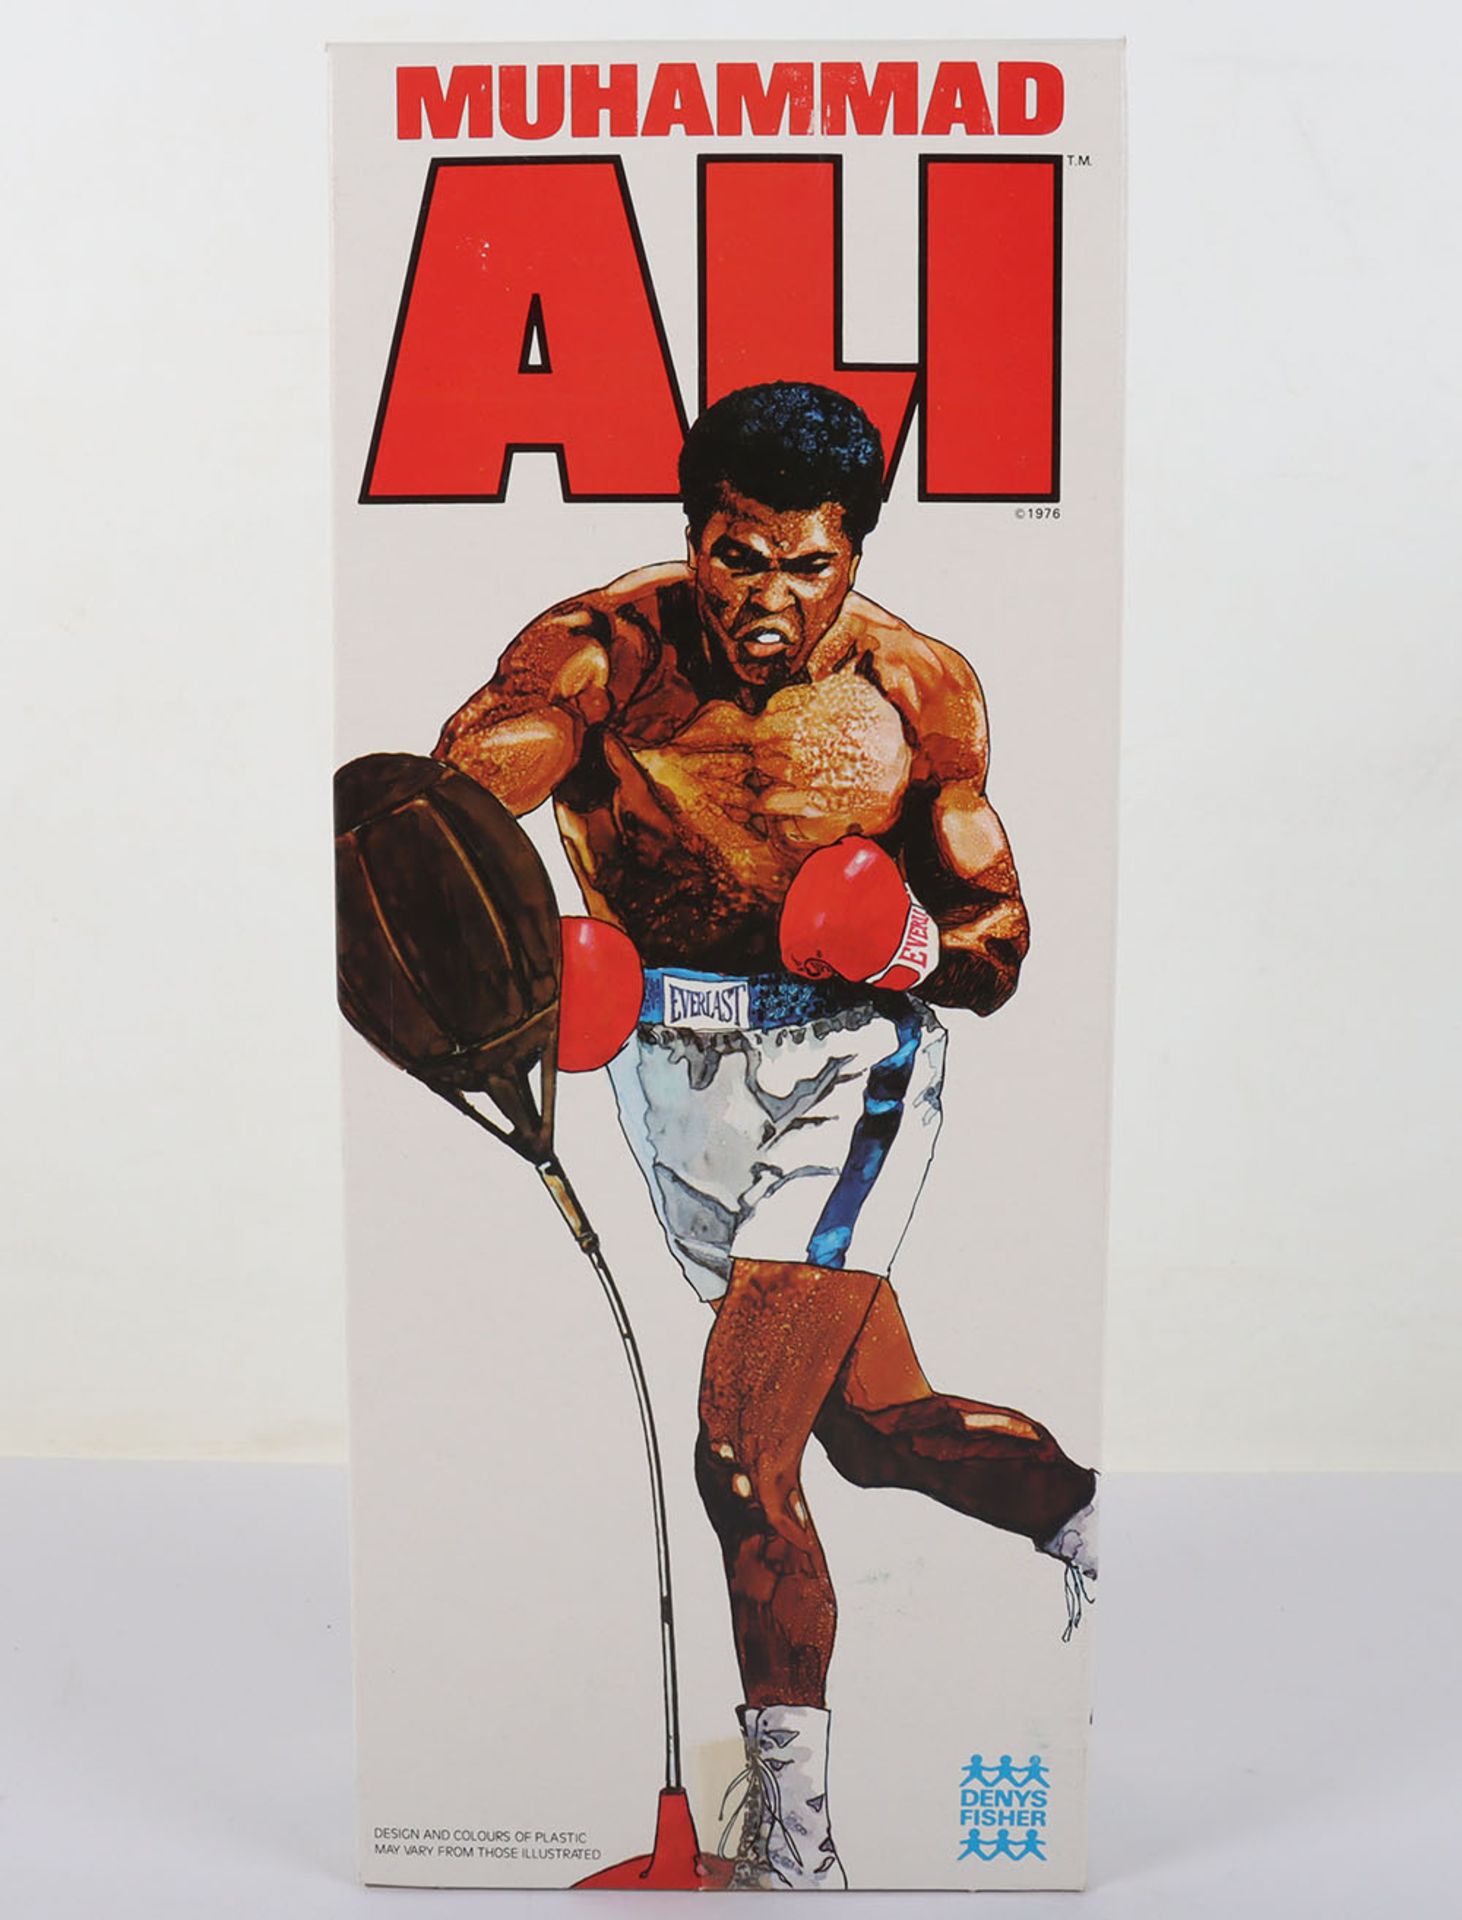 Dennys Fisher Muhammad Ali Action Figure, circa 1976